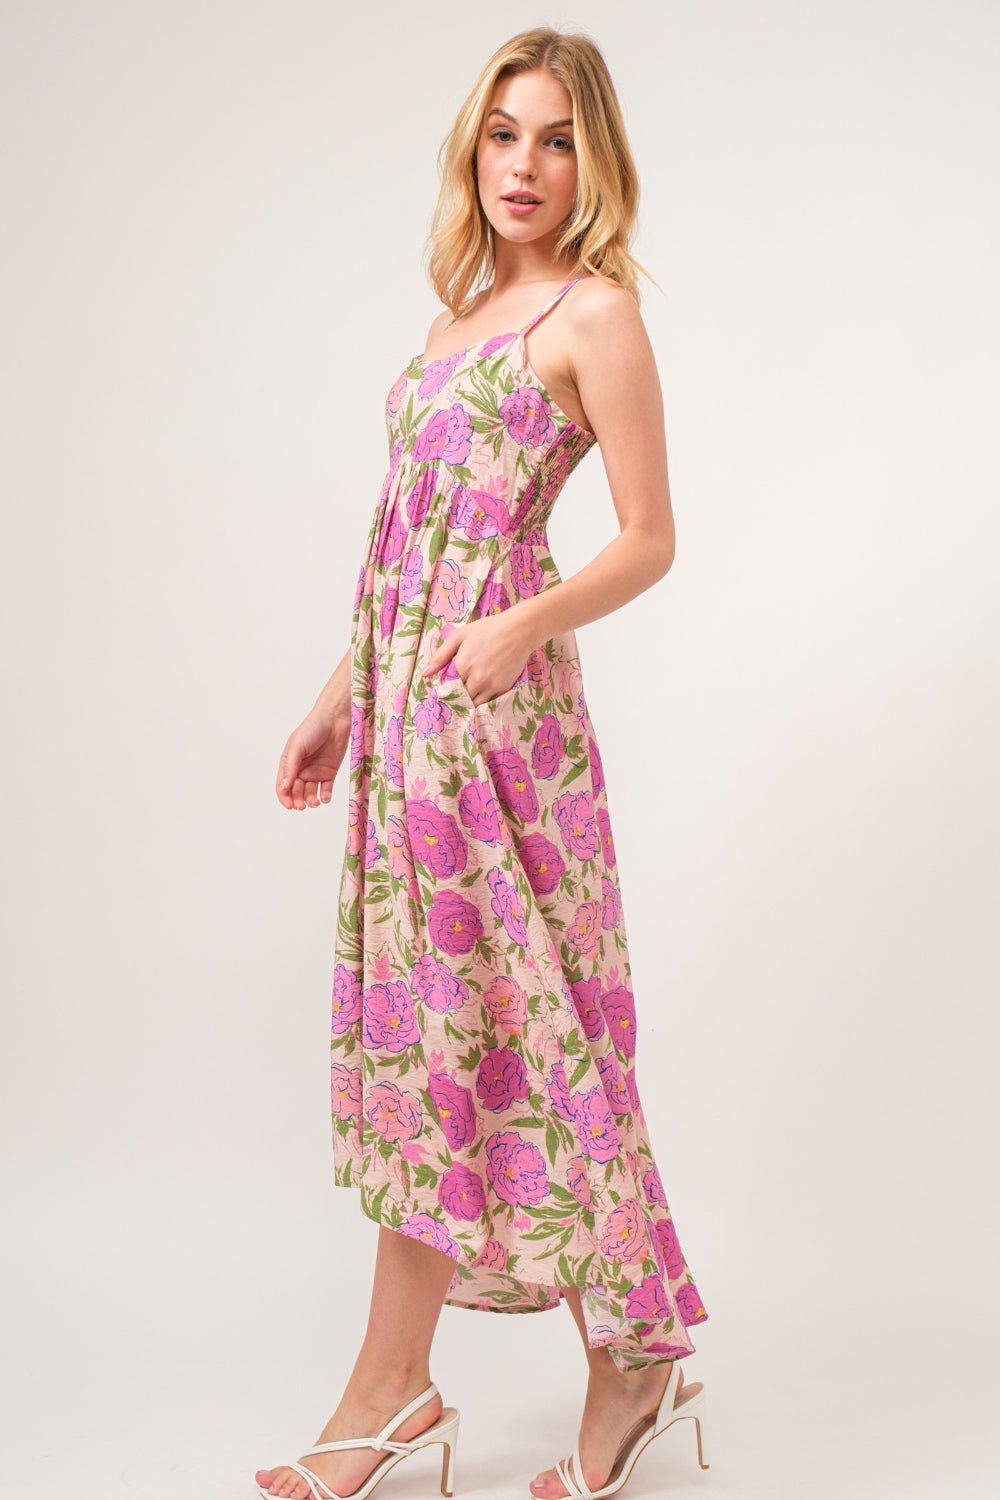 Floral High-Low Hem Midi Cami Dress in PinkMidi DressAnd the Why